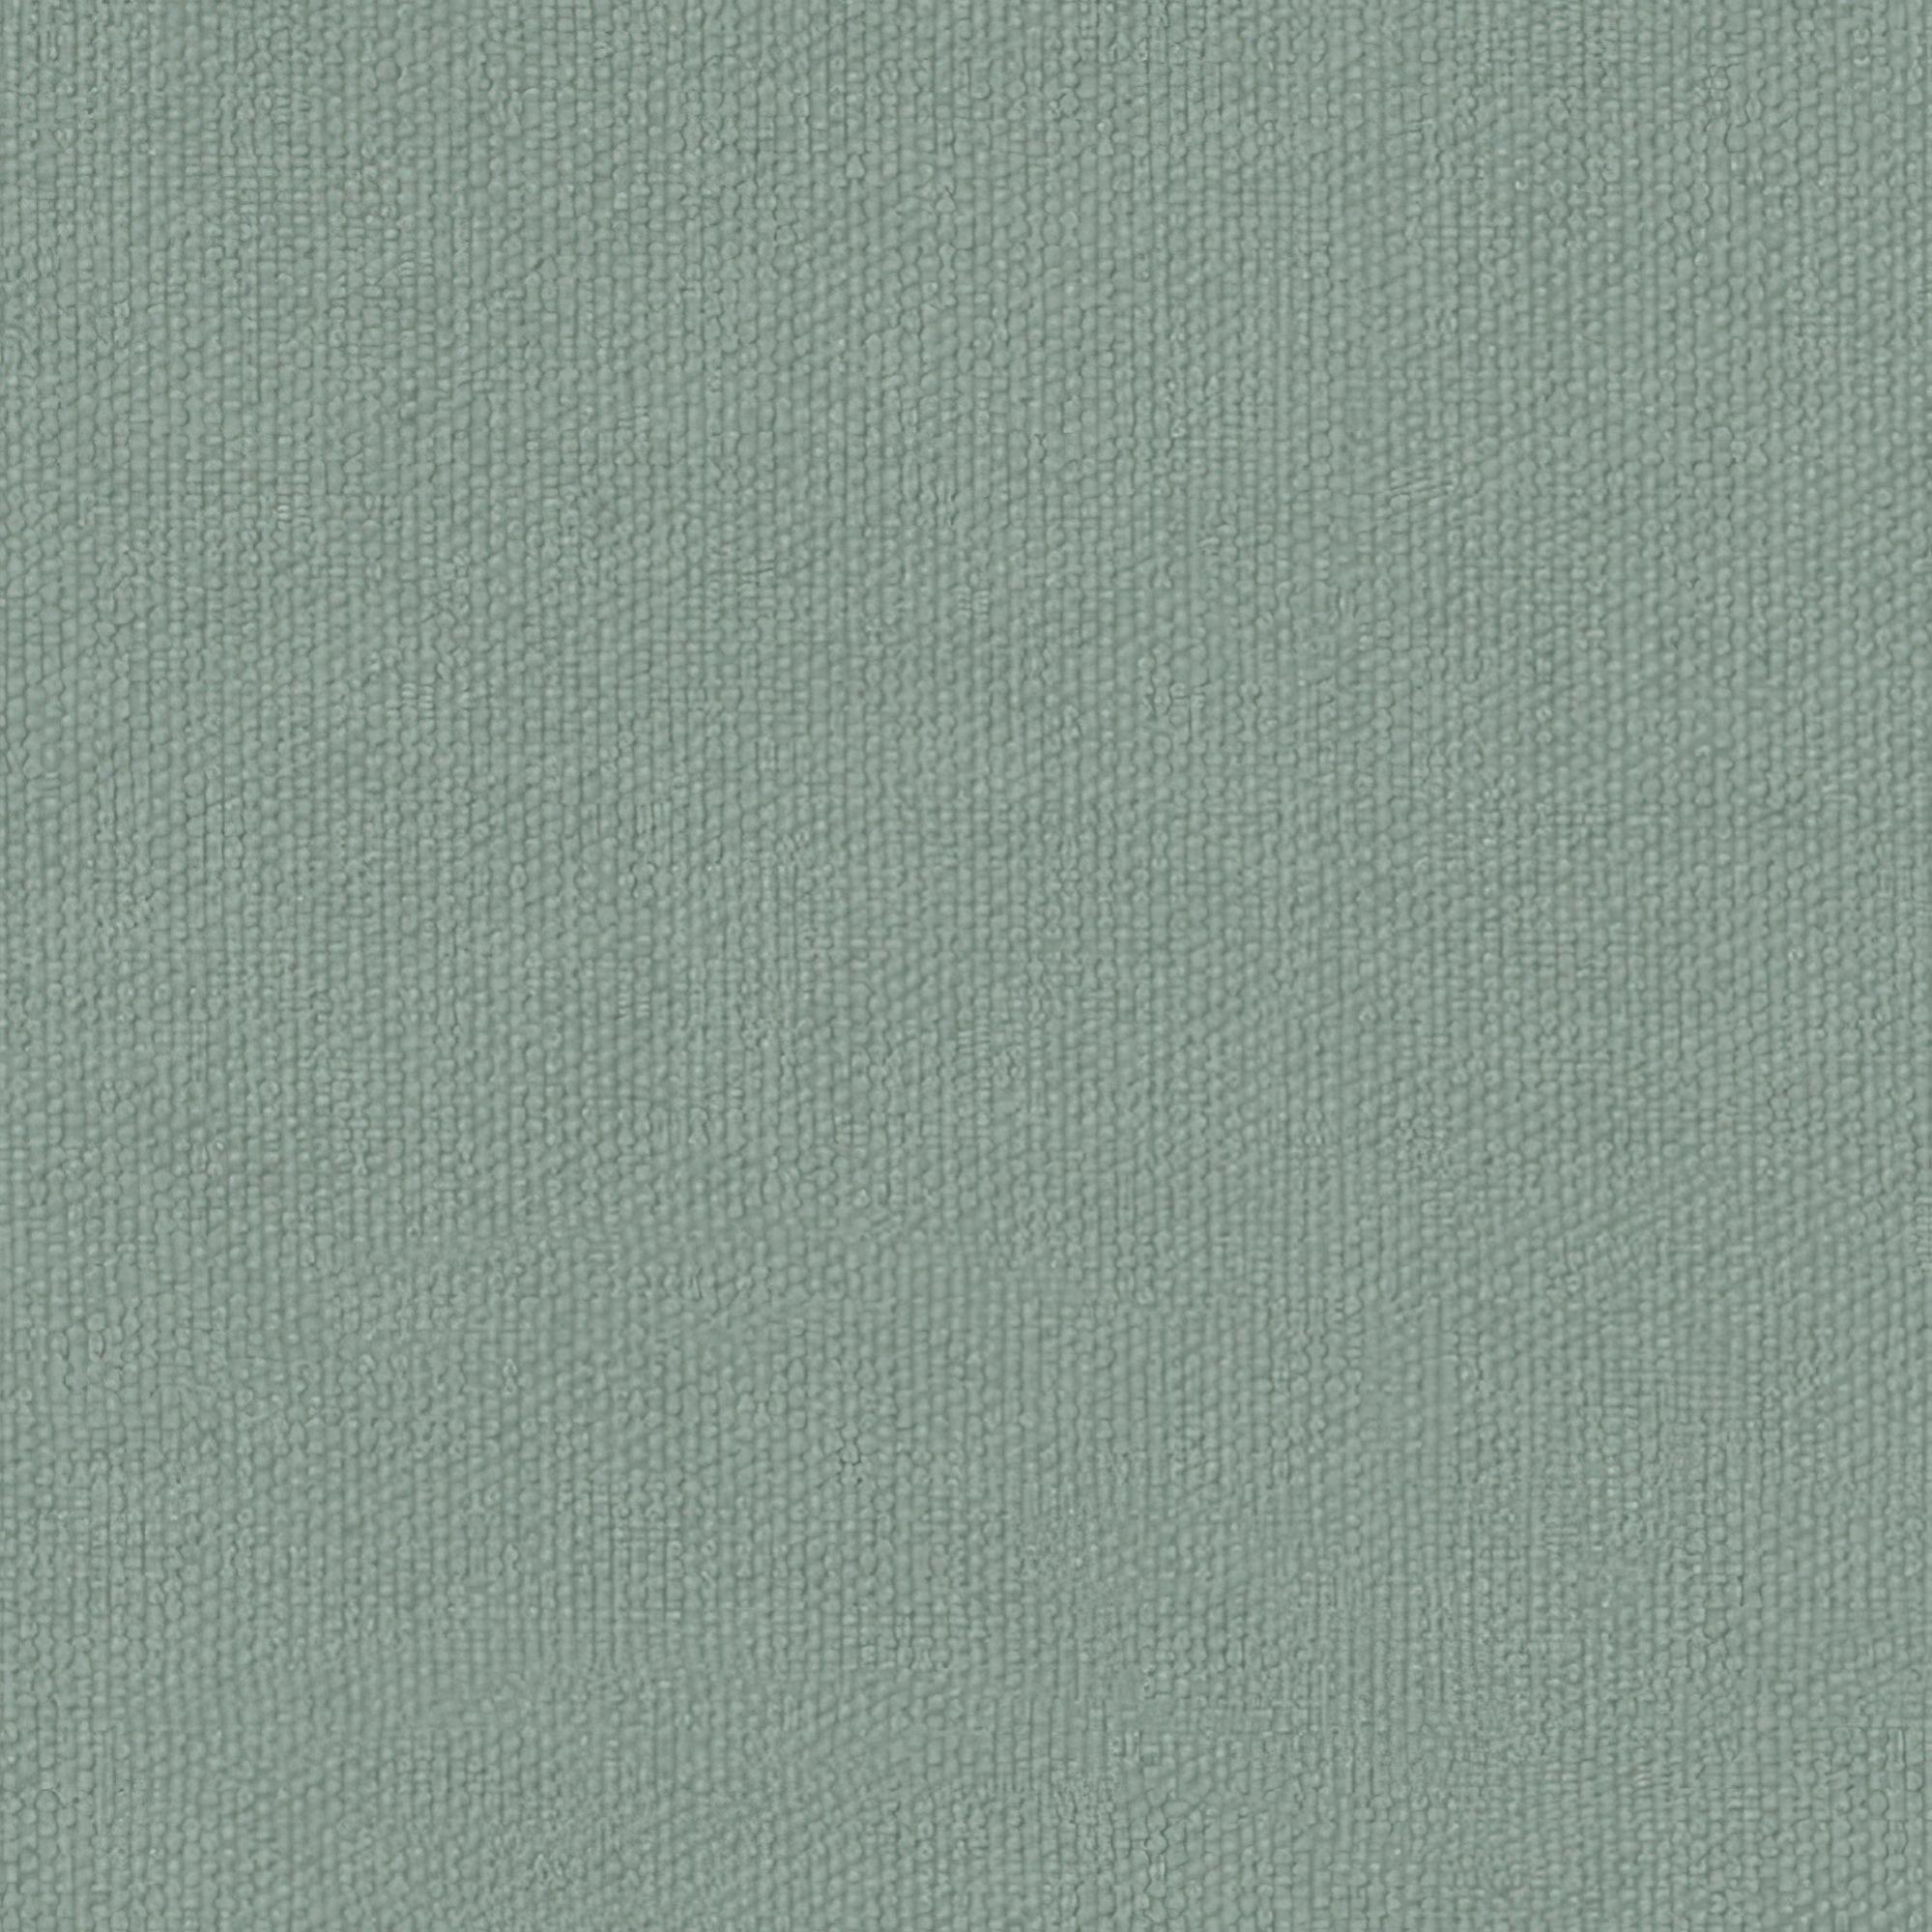 Tela al corte tapicería algodón dijon verde ancho 140 cm